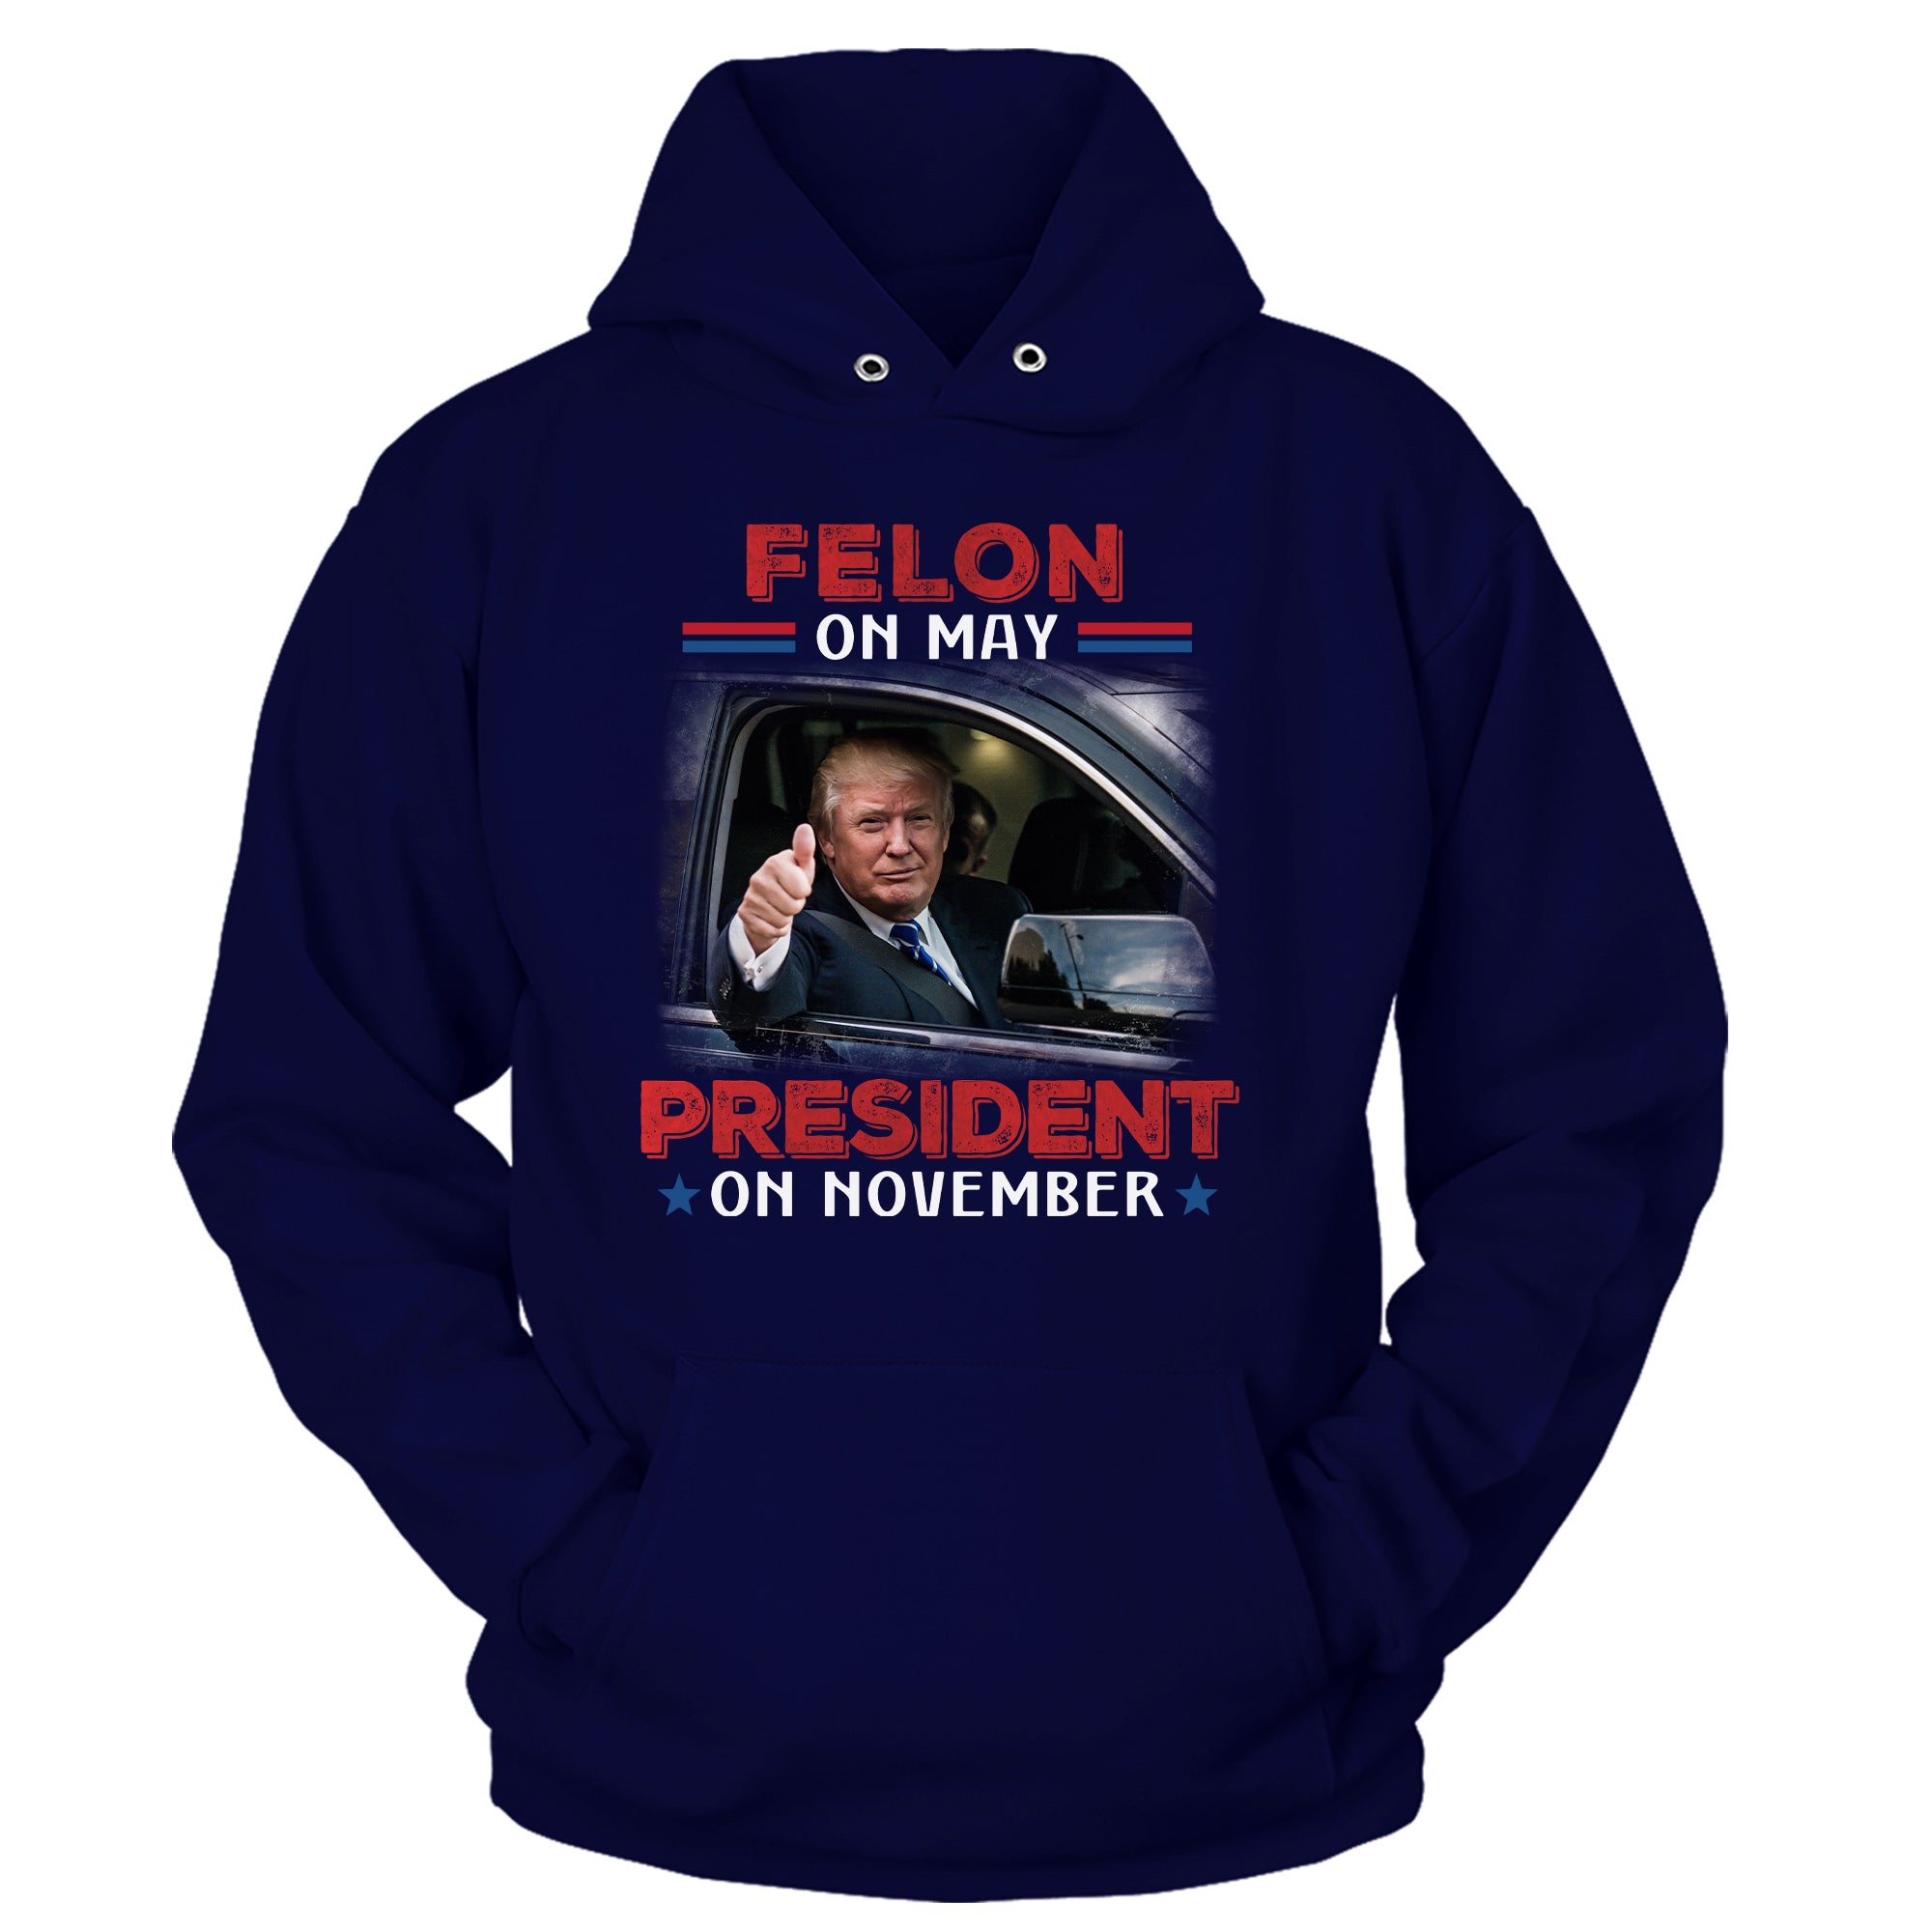 Felon On May, President On November T-Shirt - GB70